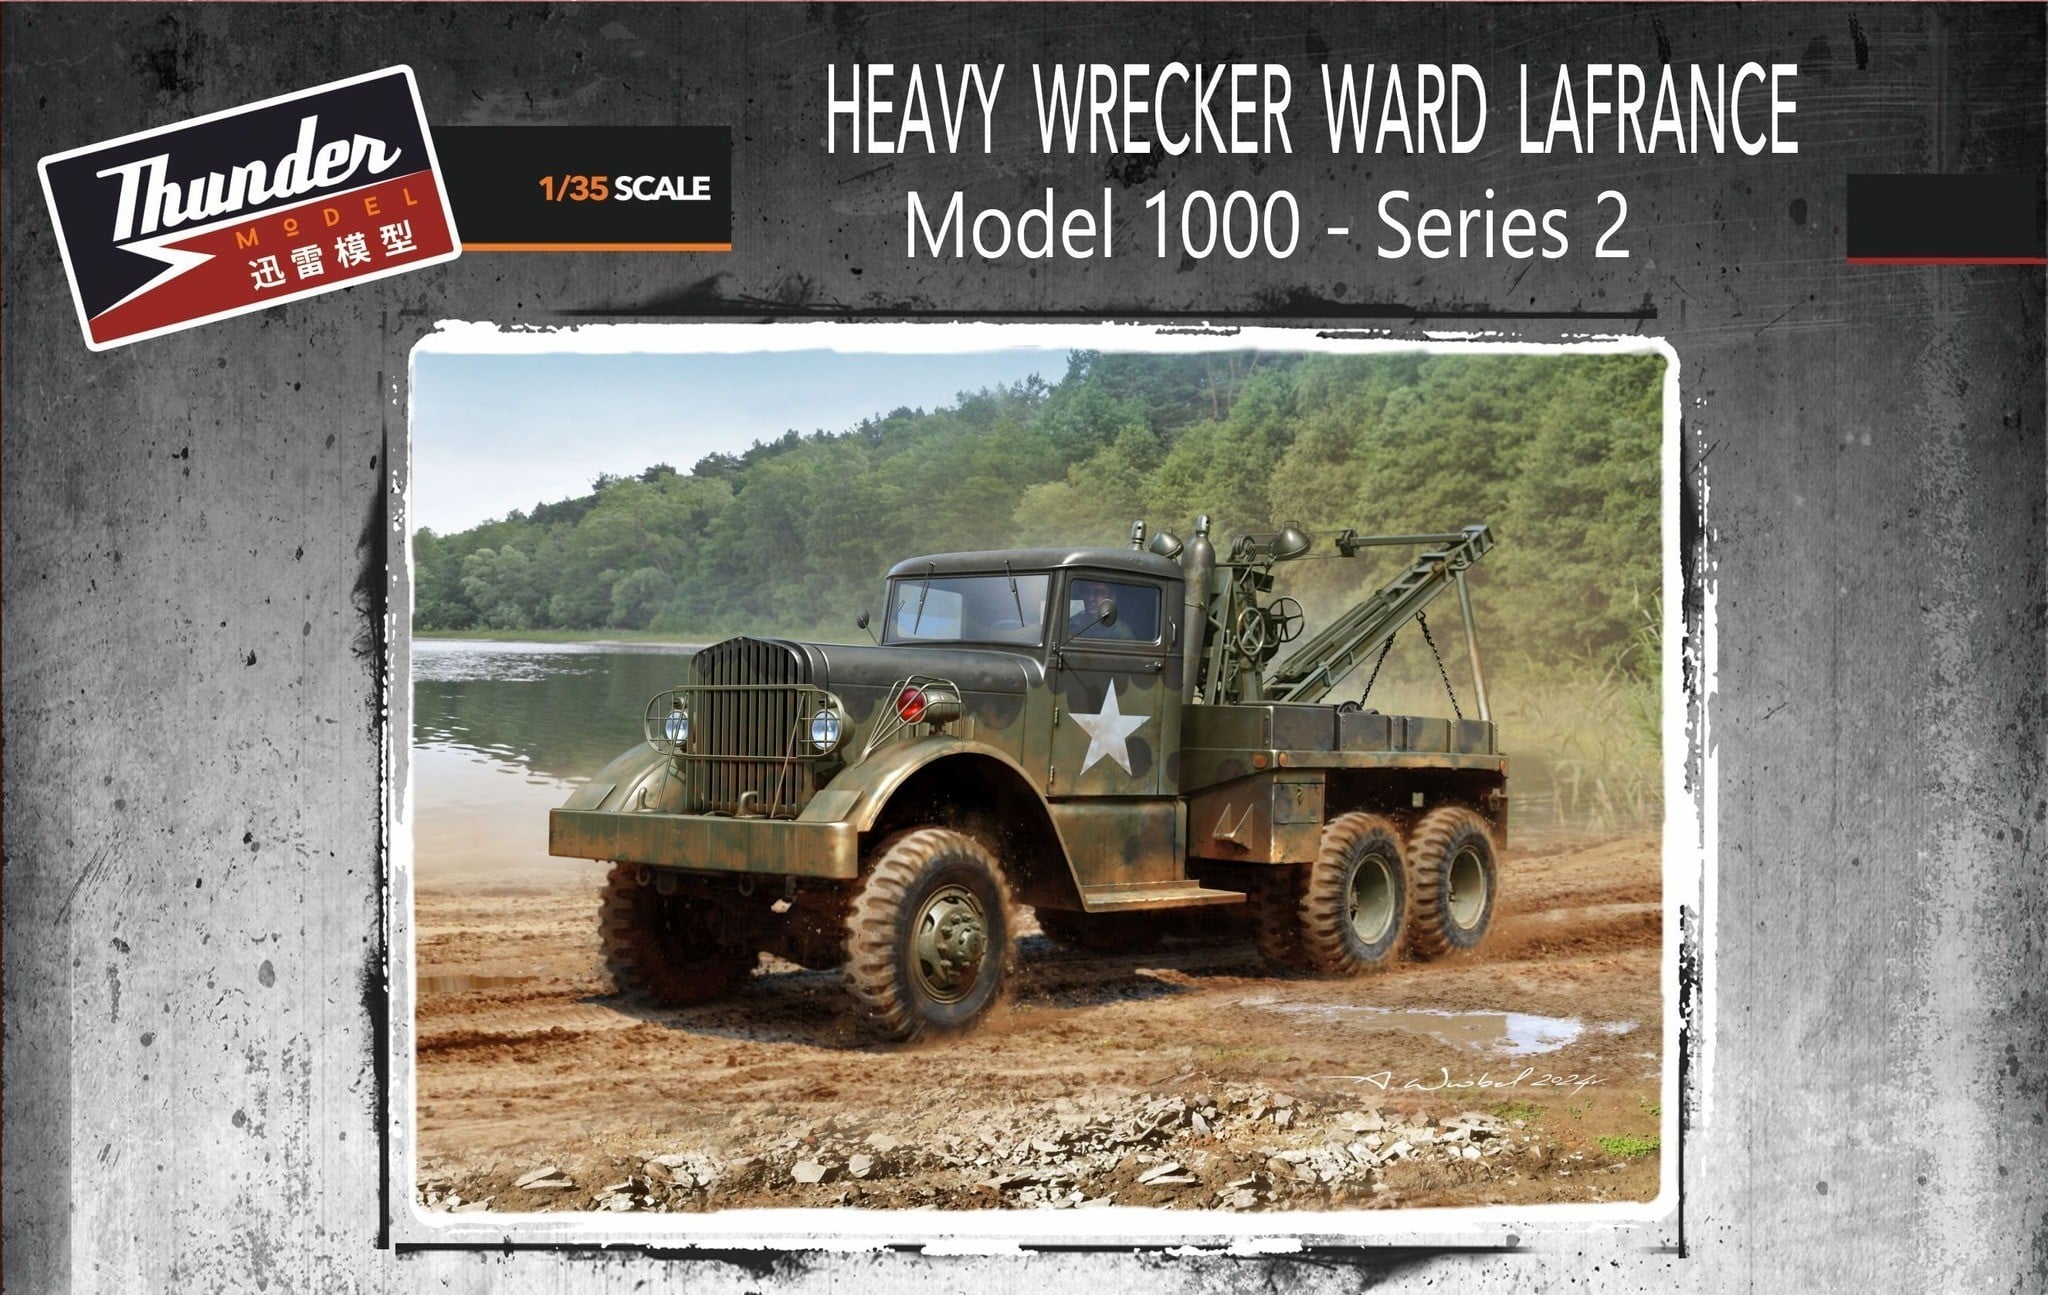 Thunder Model: Heavy Wrecker Ward LaFrance